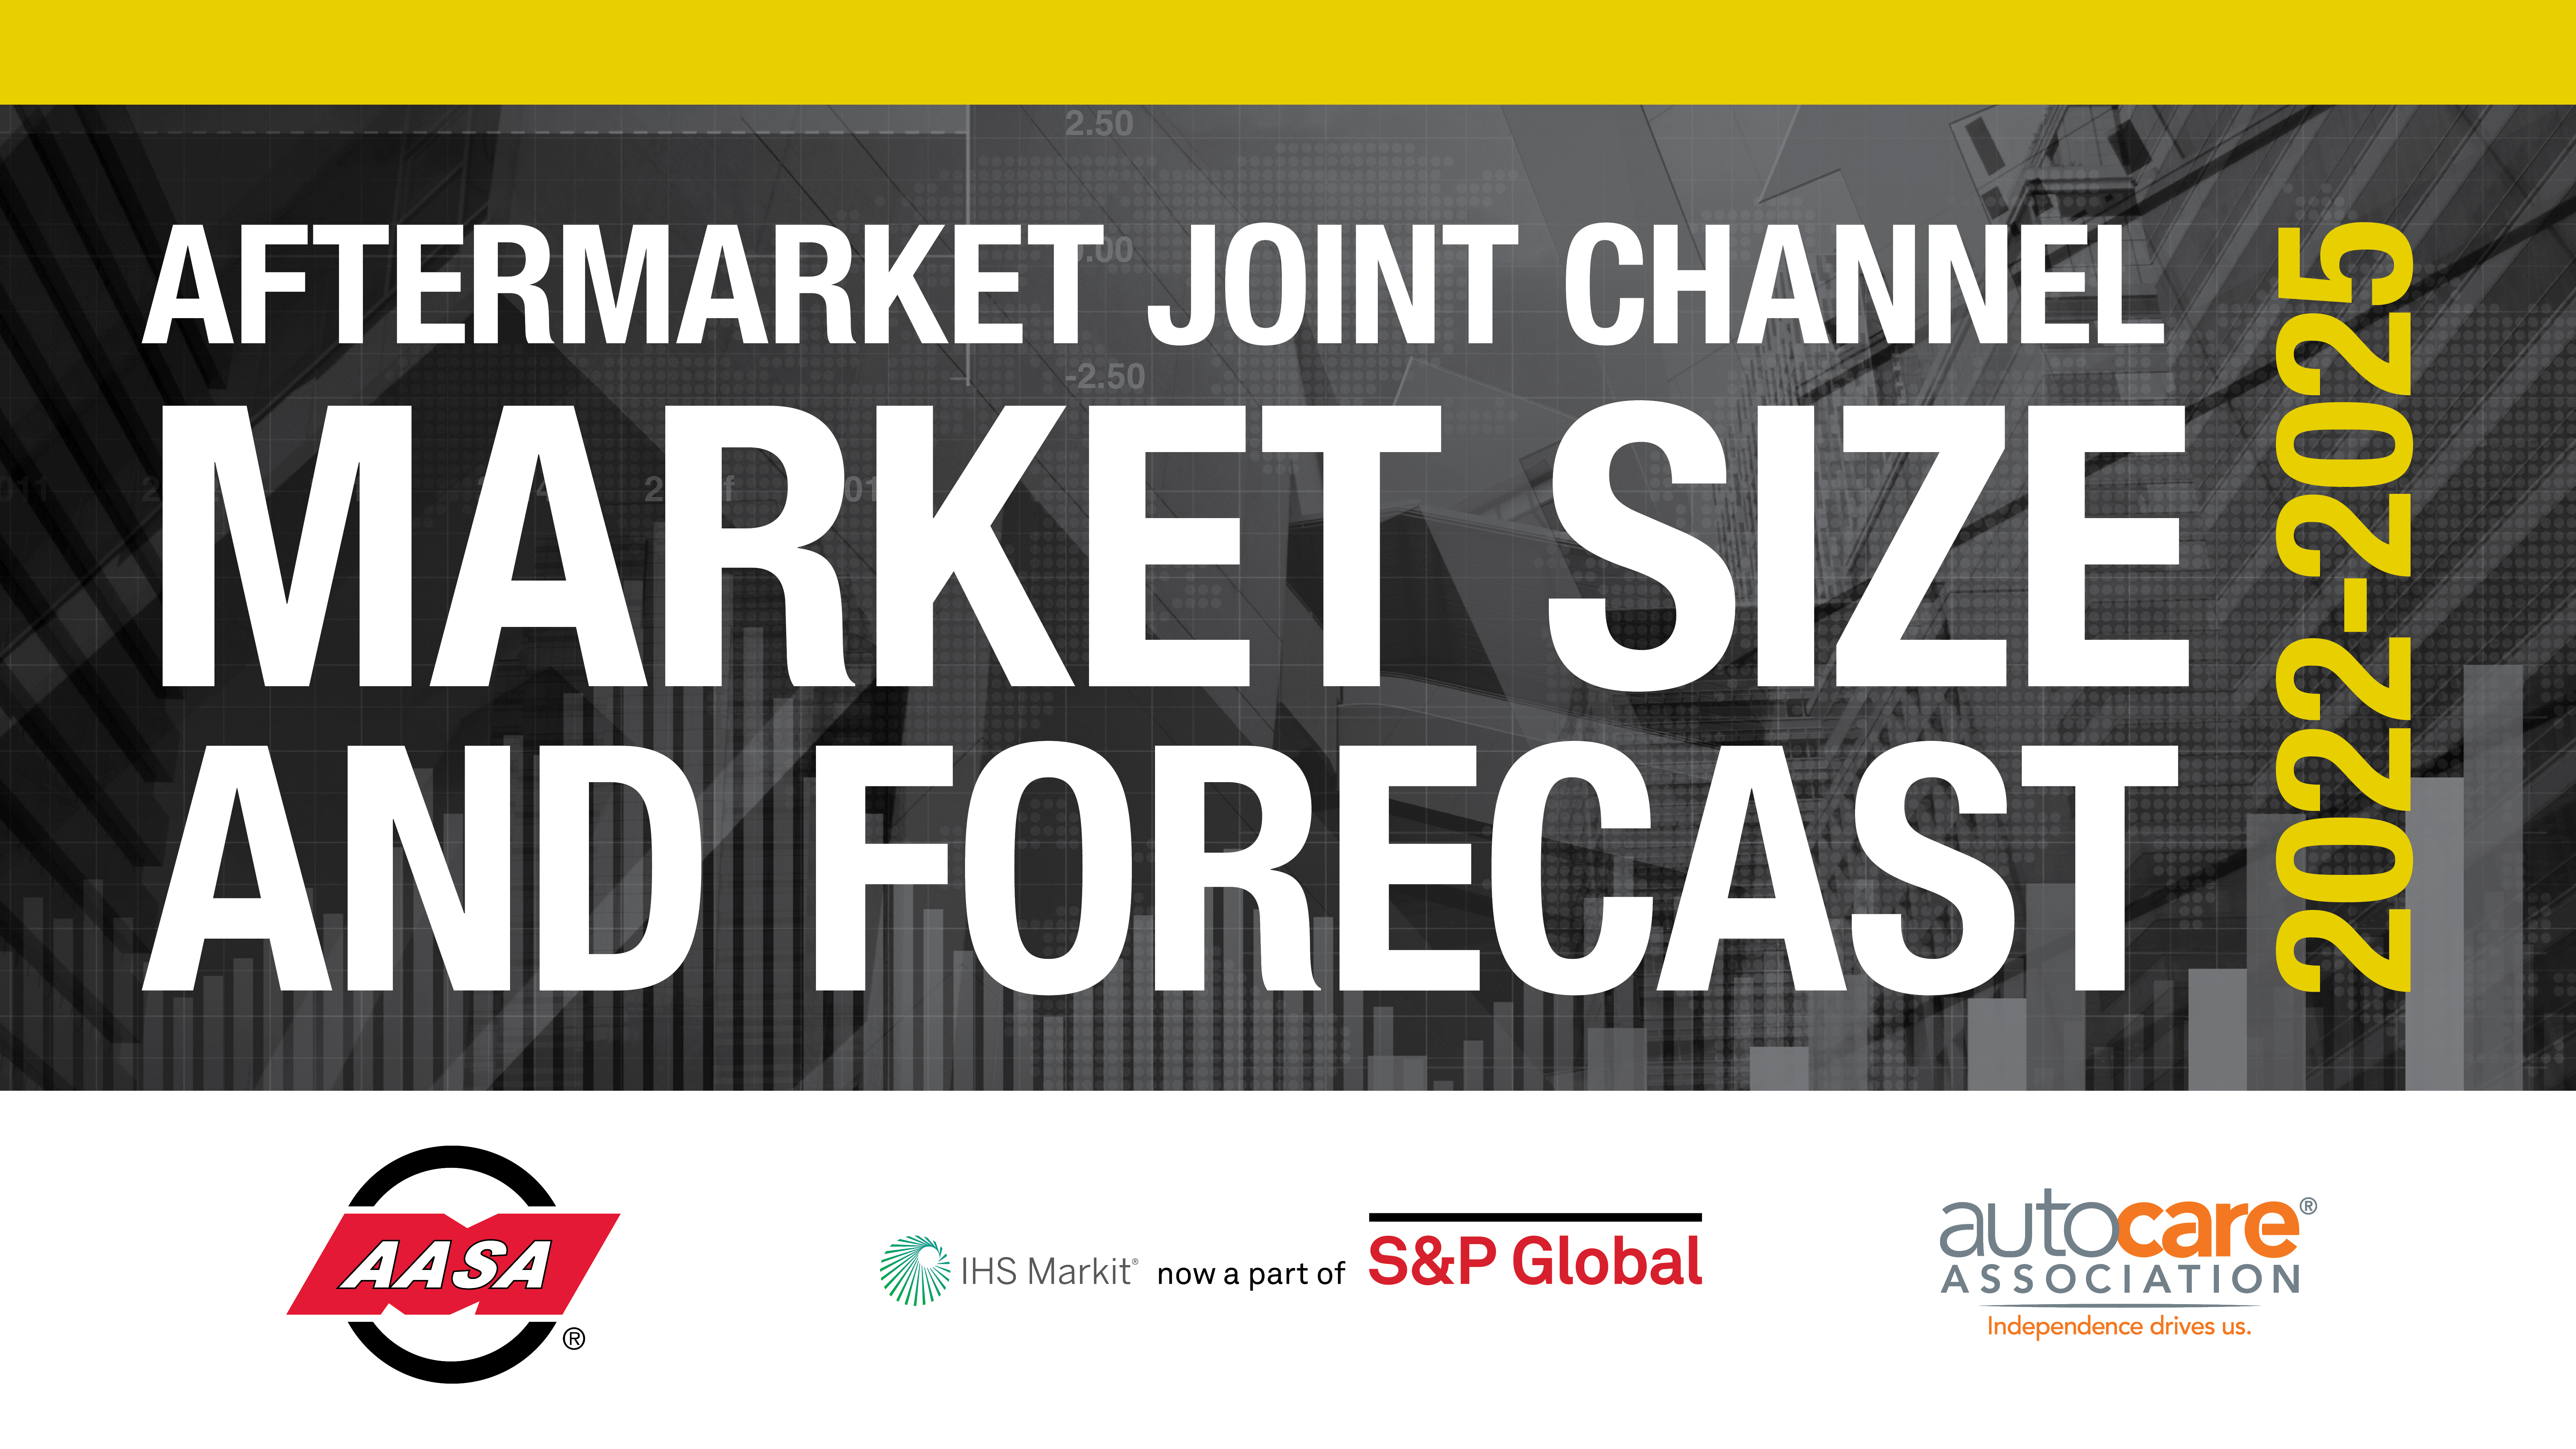 Aftermarket Joint Channel Market Size and Forecast webinar image